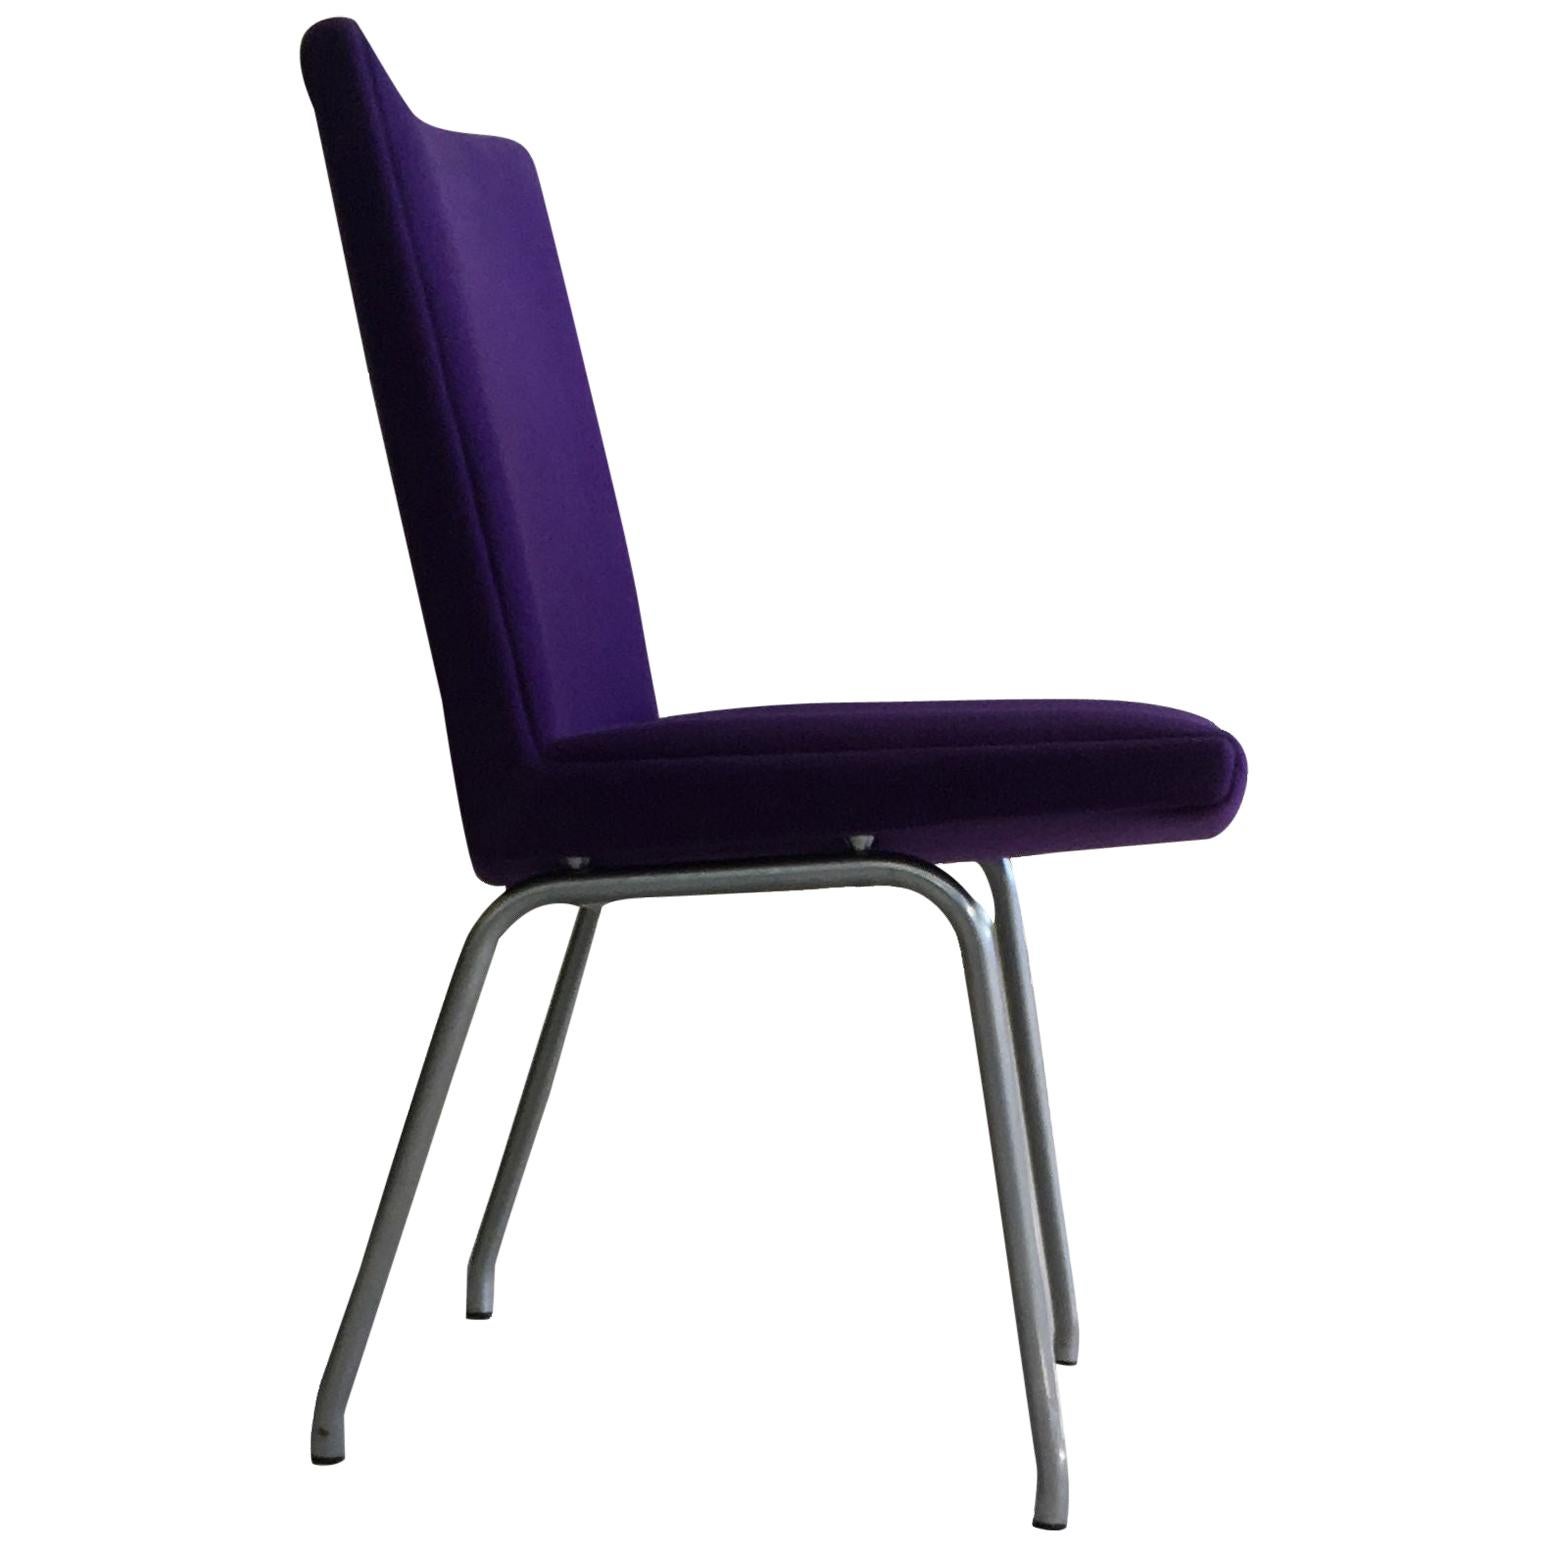 1960s Danish Hans J. Wegner Airport Chair, Reupholstered in Purple Fabric For Sale